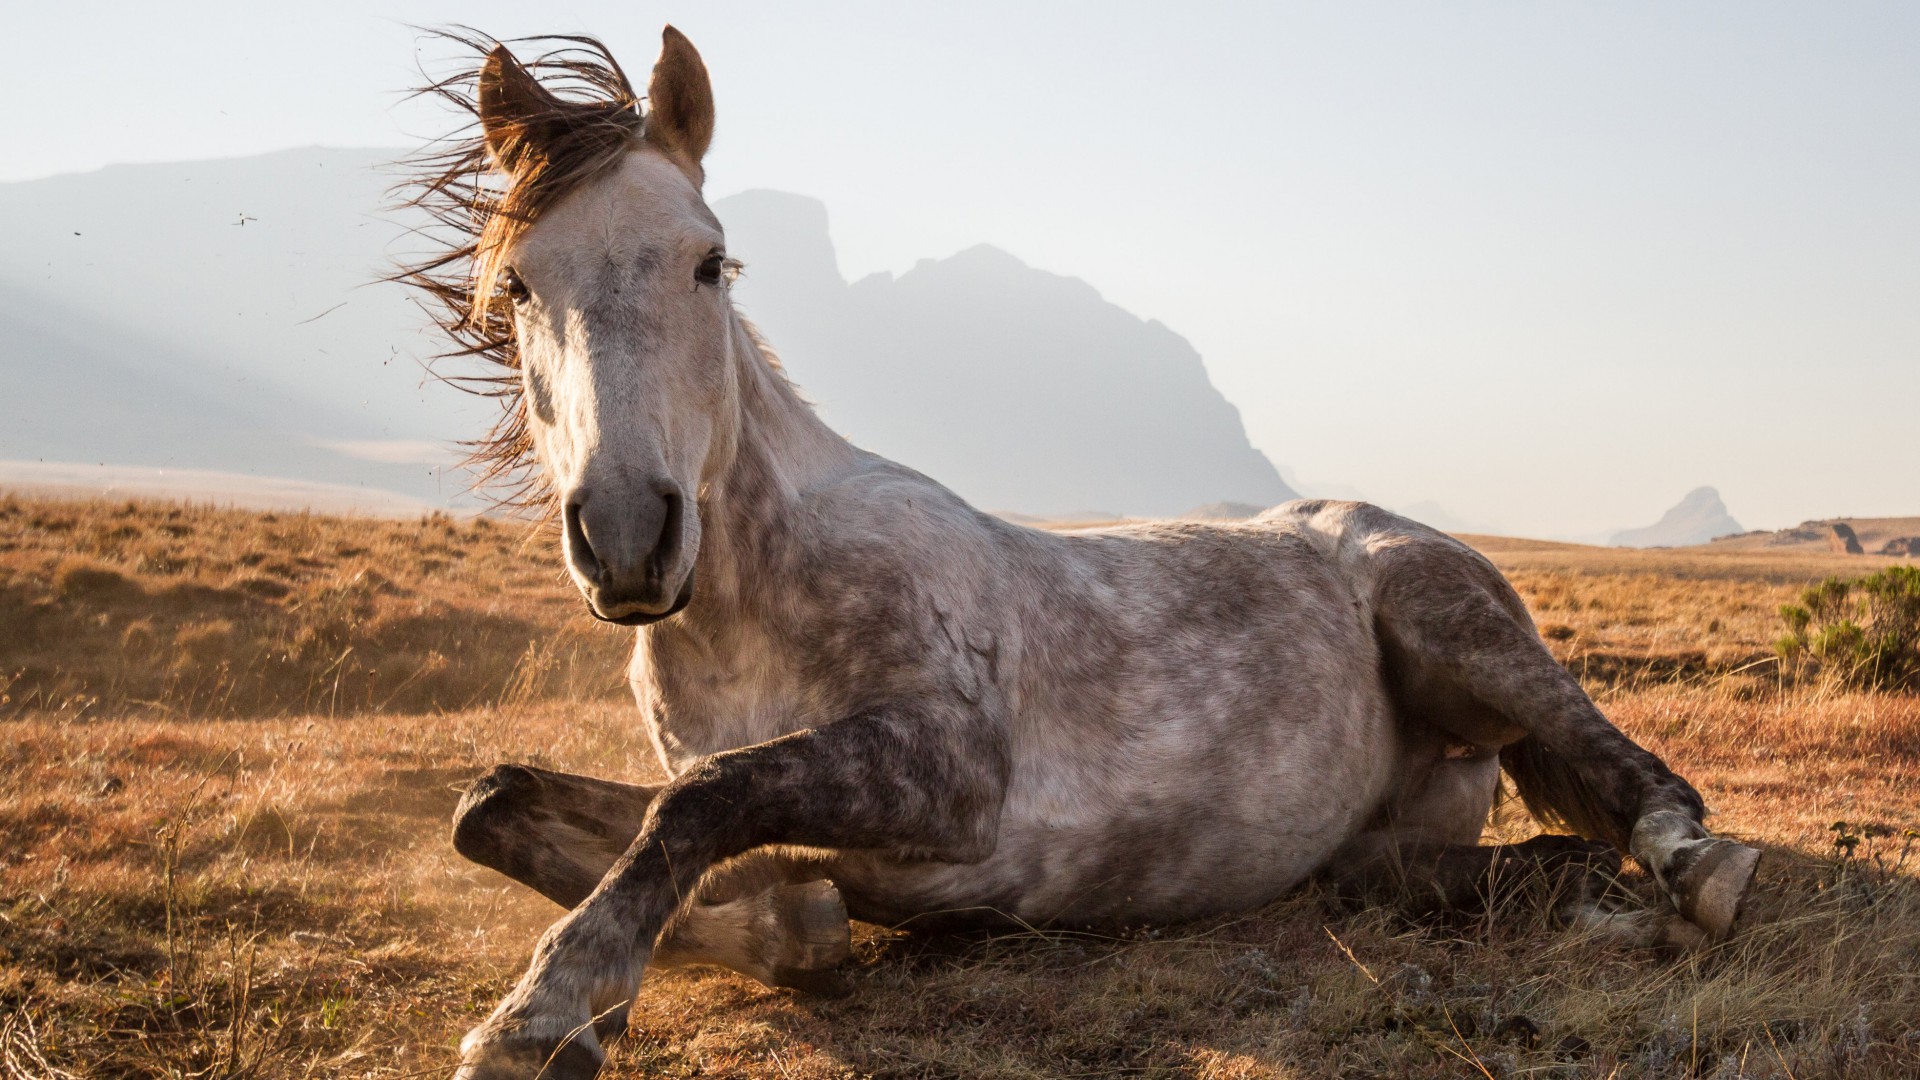 Horse, Africa, National Geographics (horizontal)